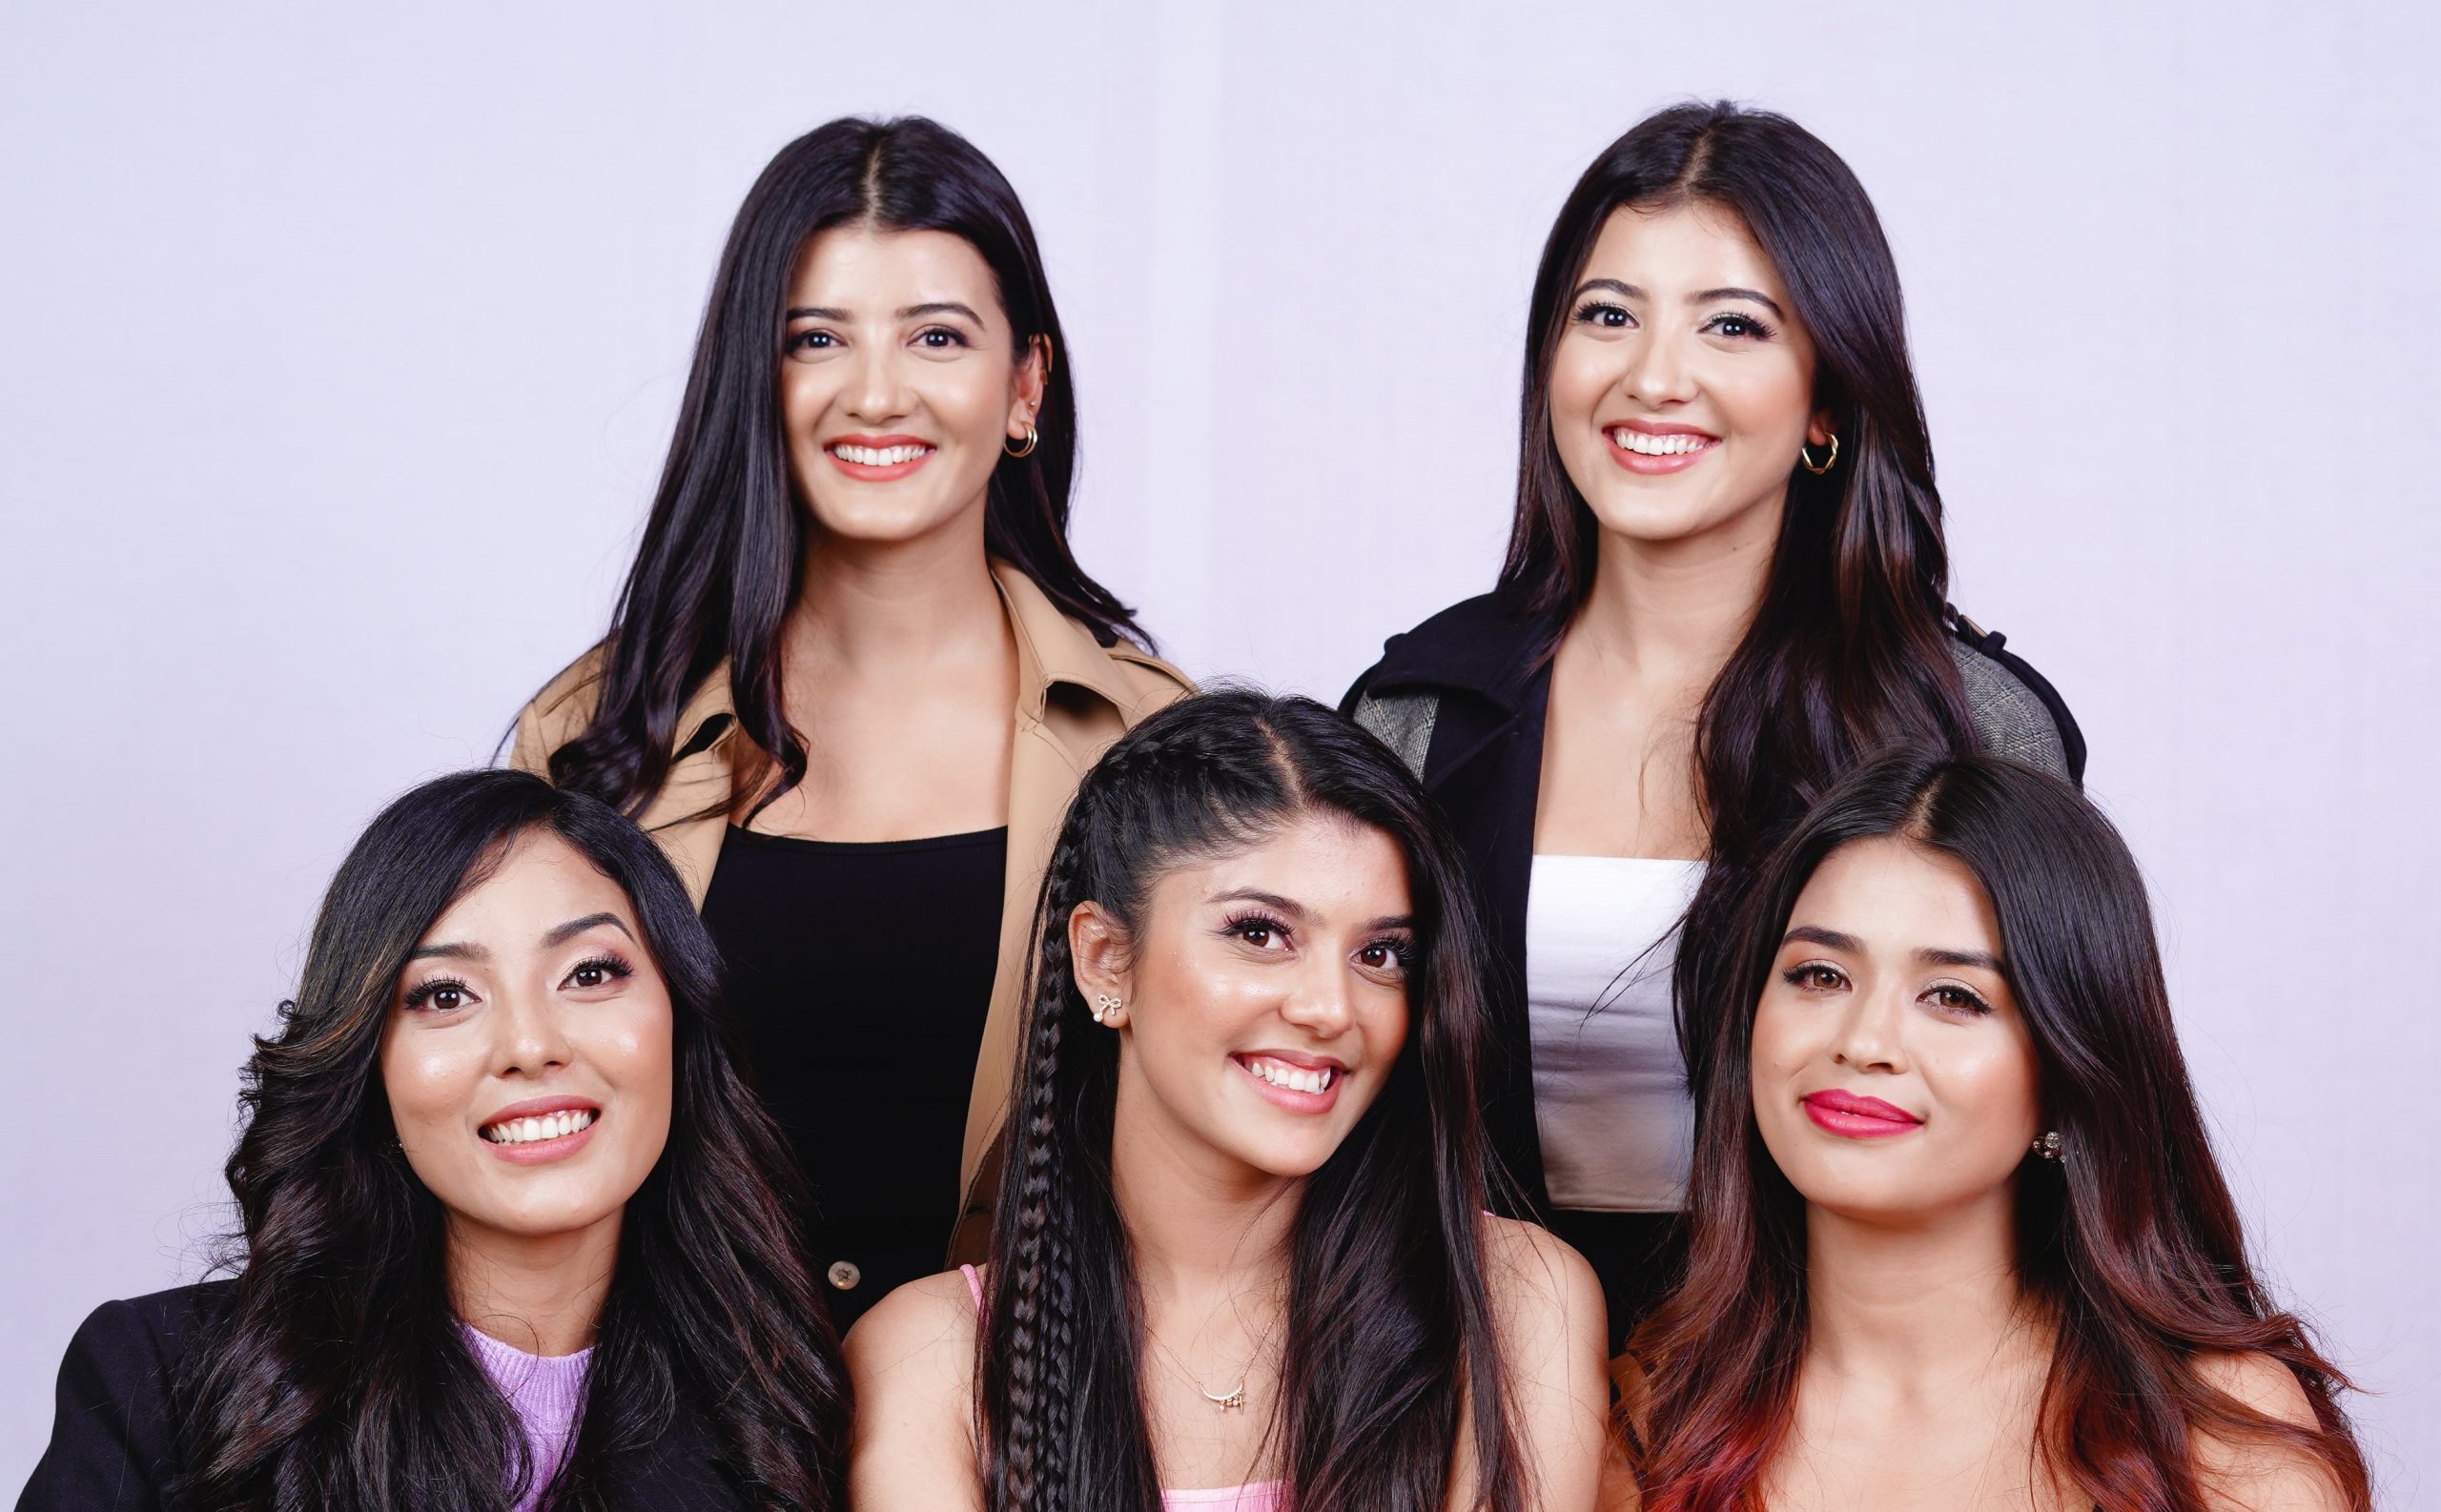 SUNSILK Dashain vibes 2 gang of girls winners announced